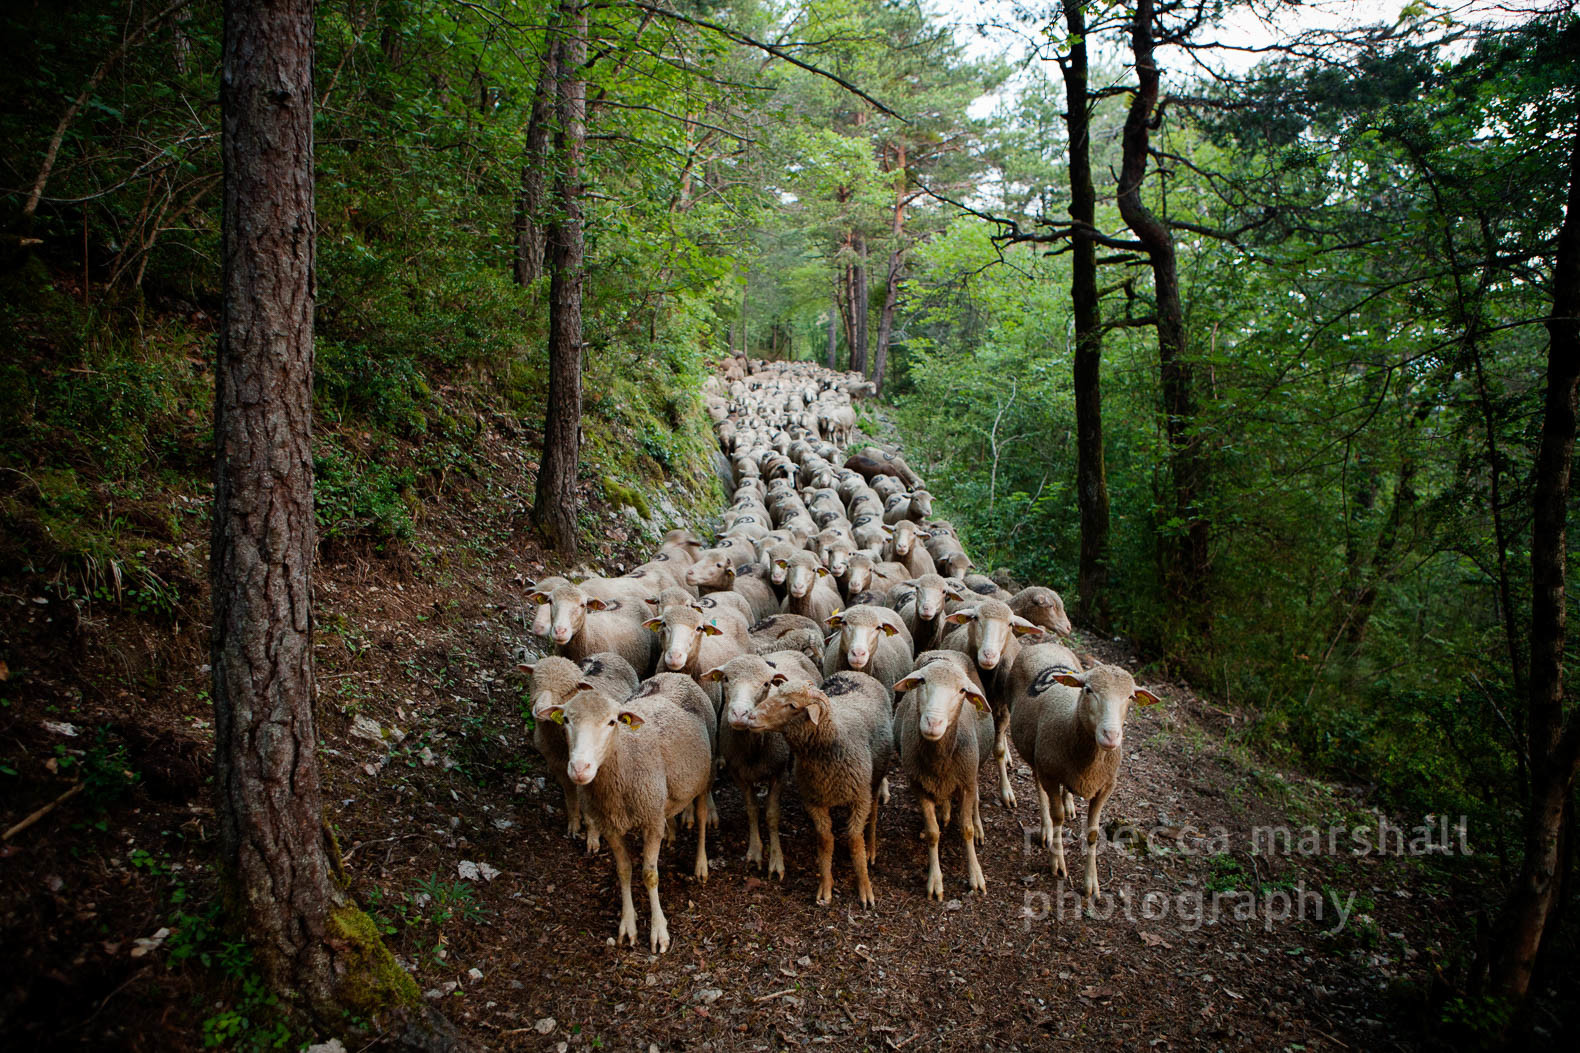 A flock of sheep walk down a woodland trail